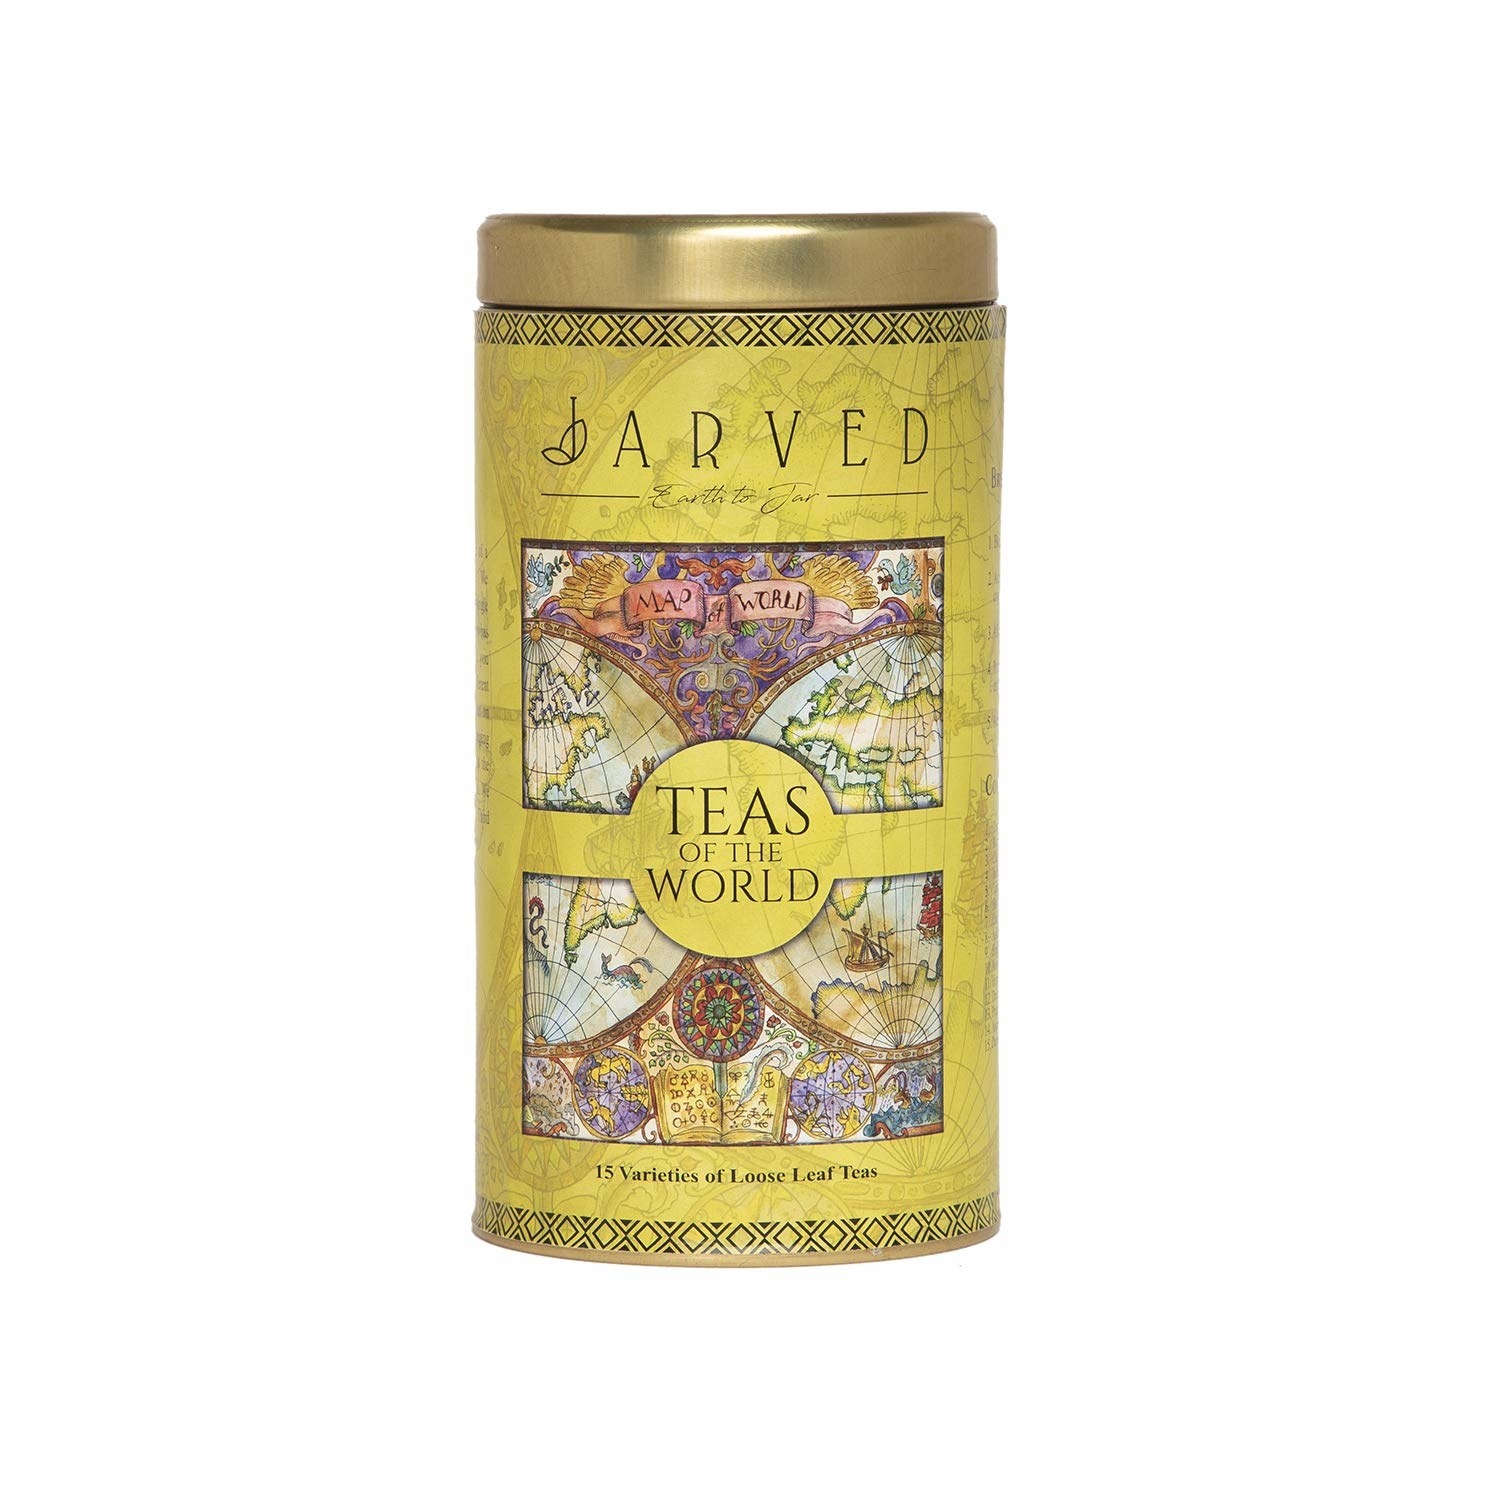 Yellow tin box that contains teas of the world